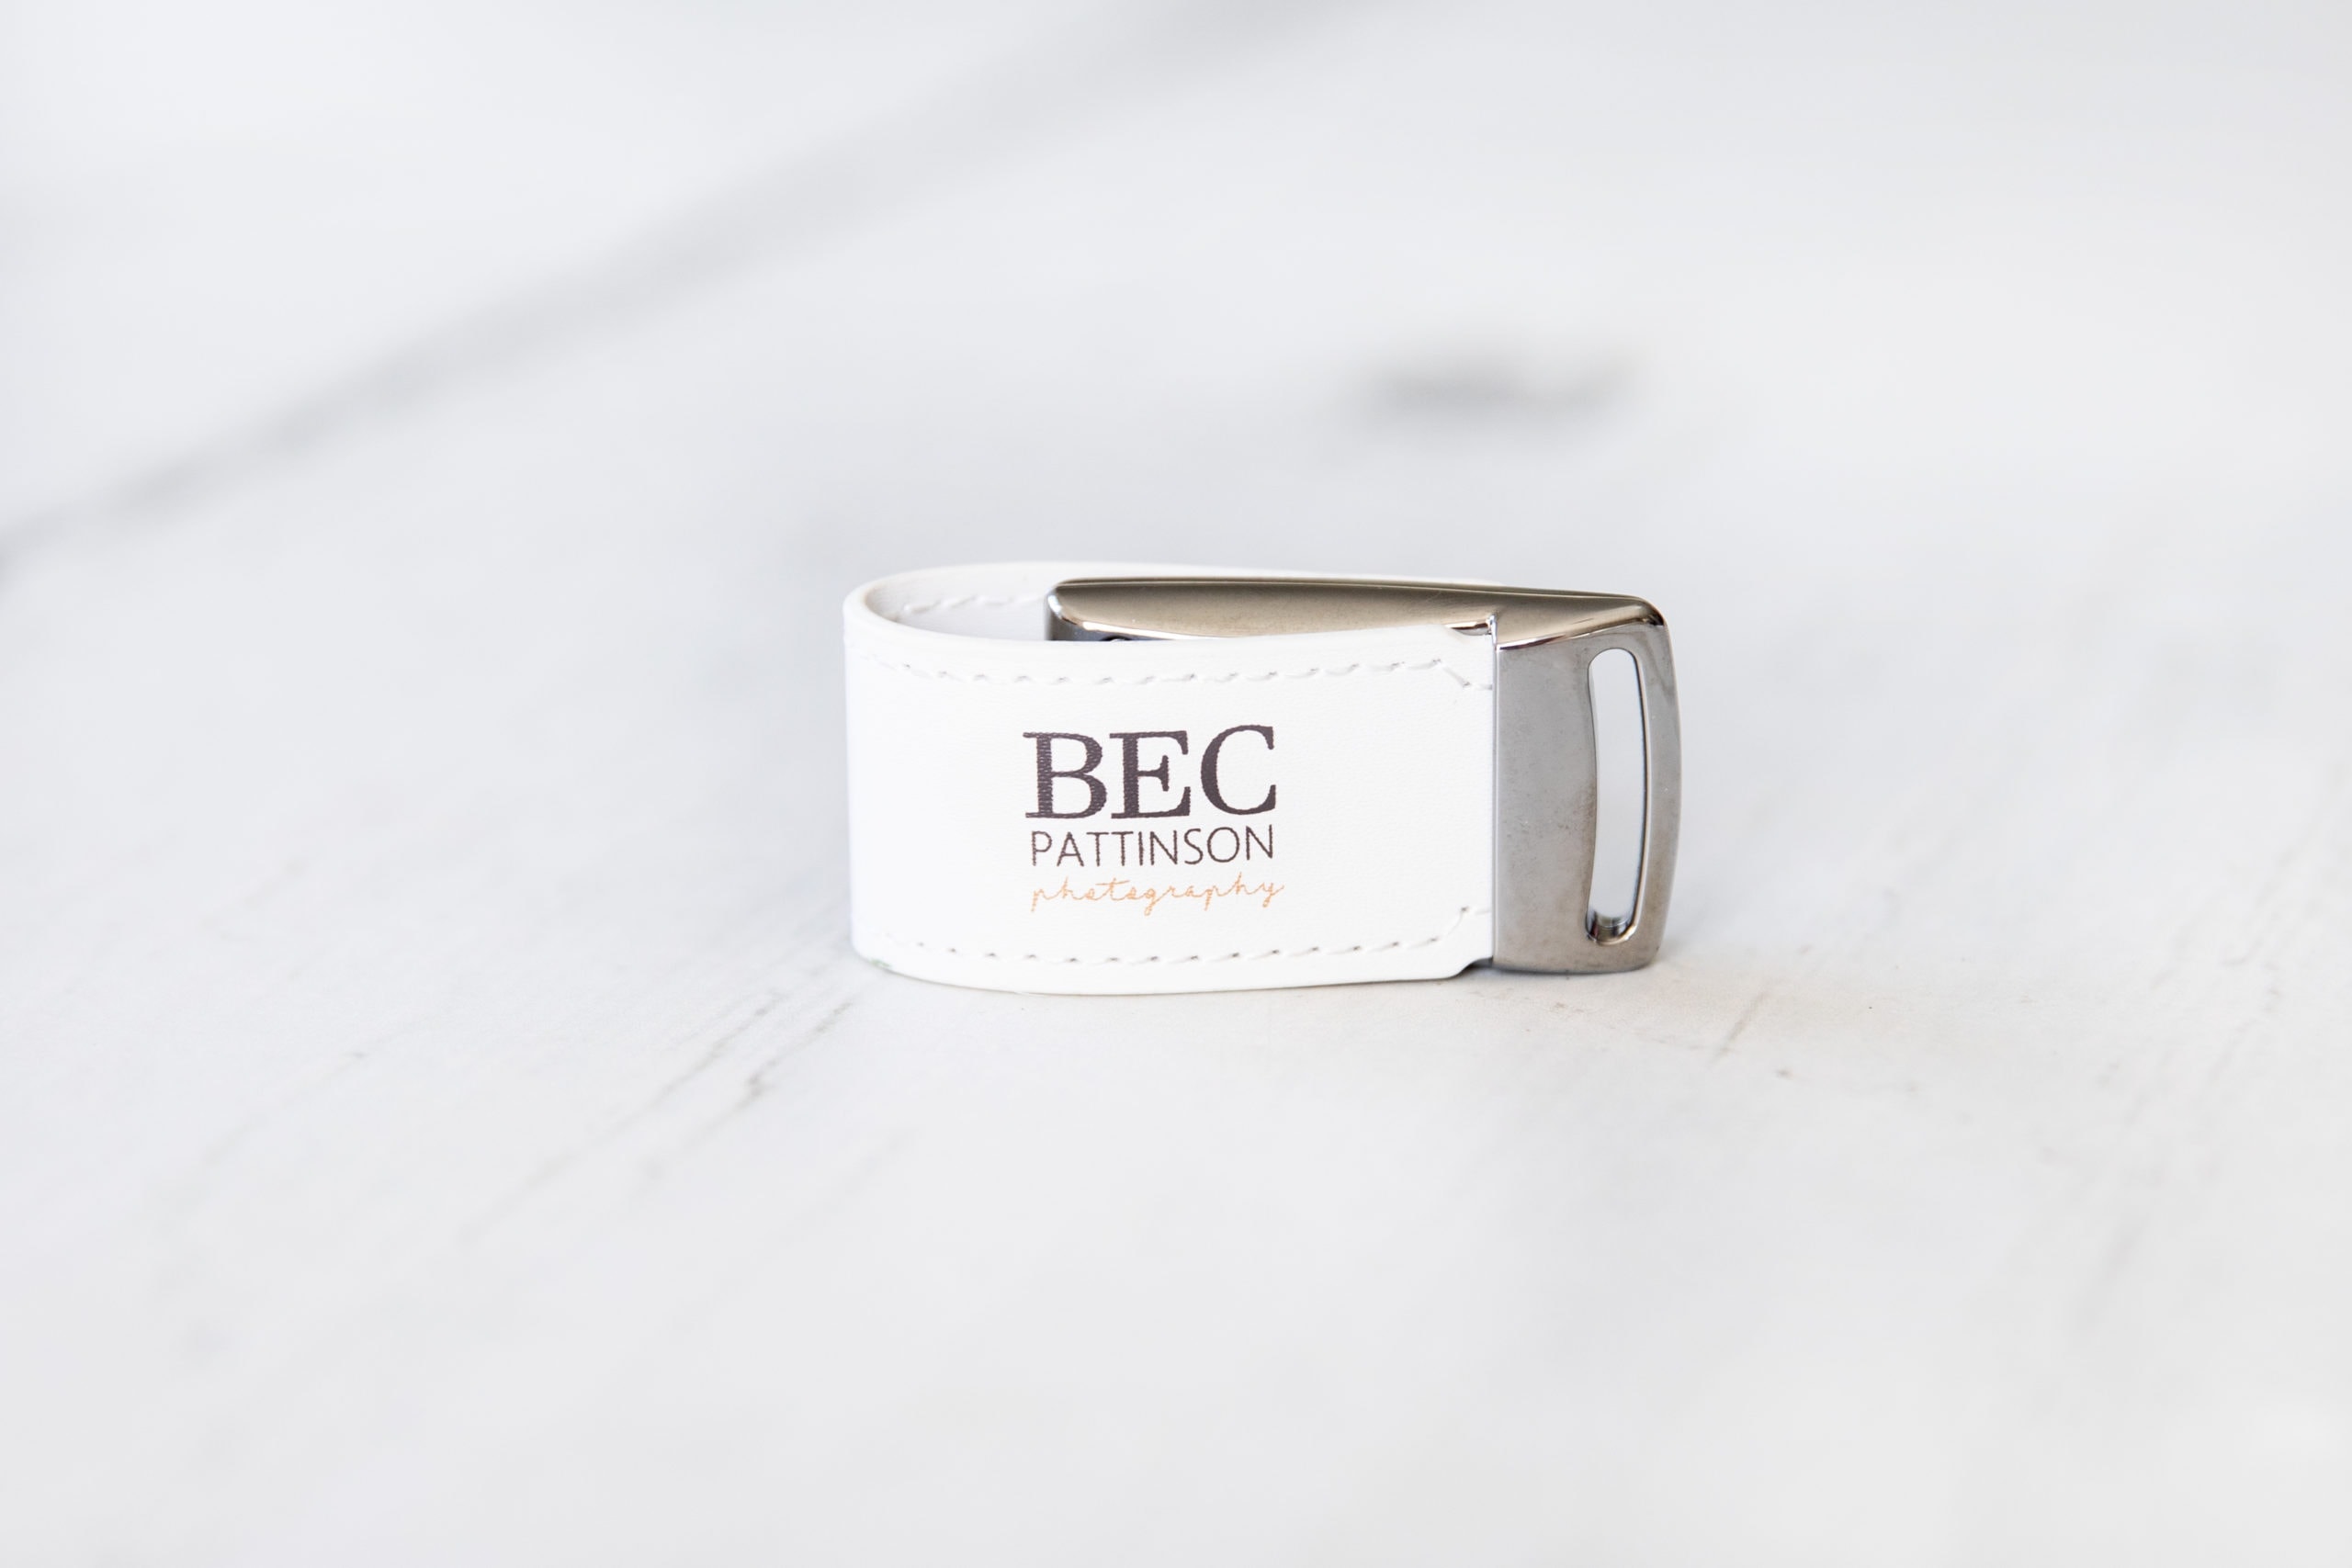 Bec Pattinson Photography Leather USB